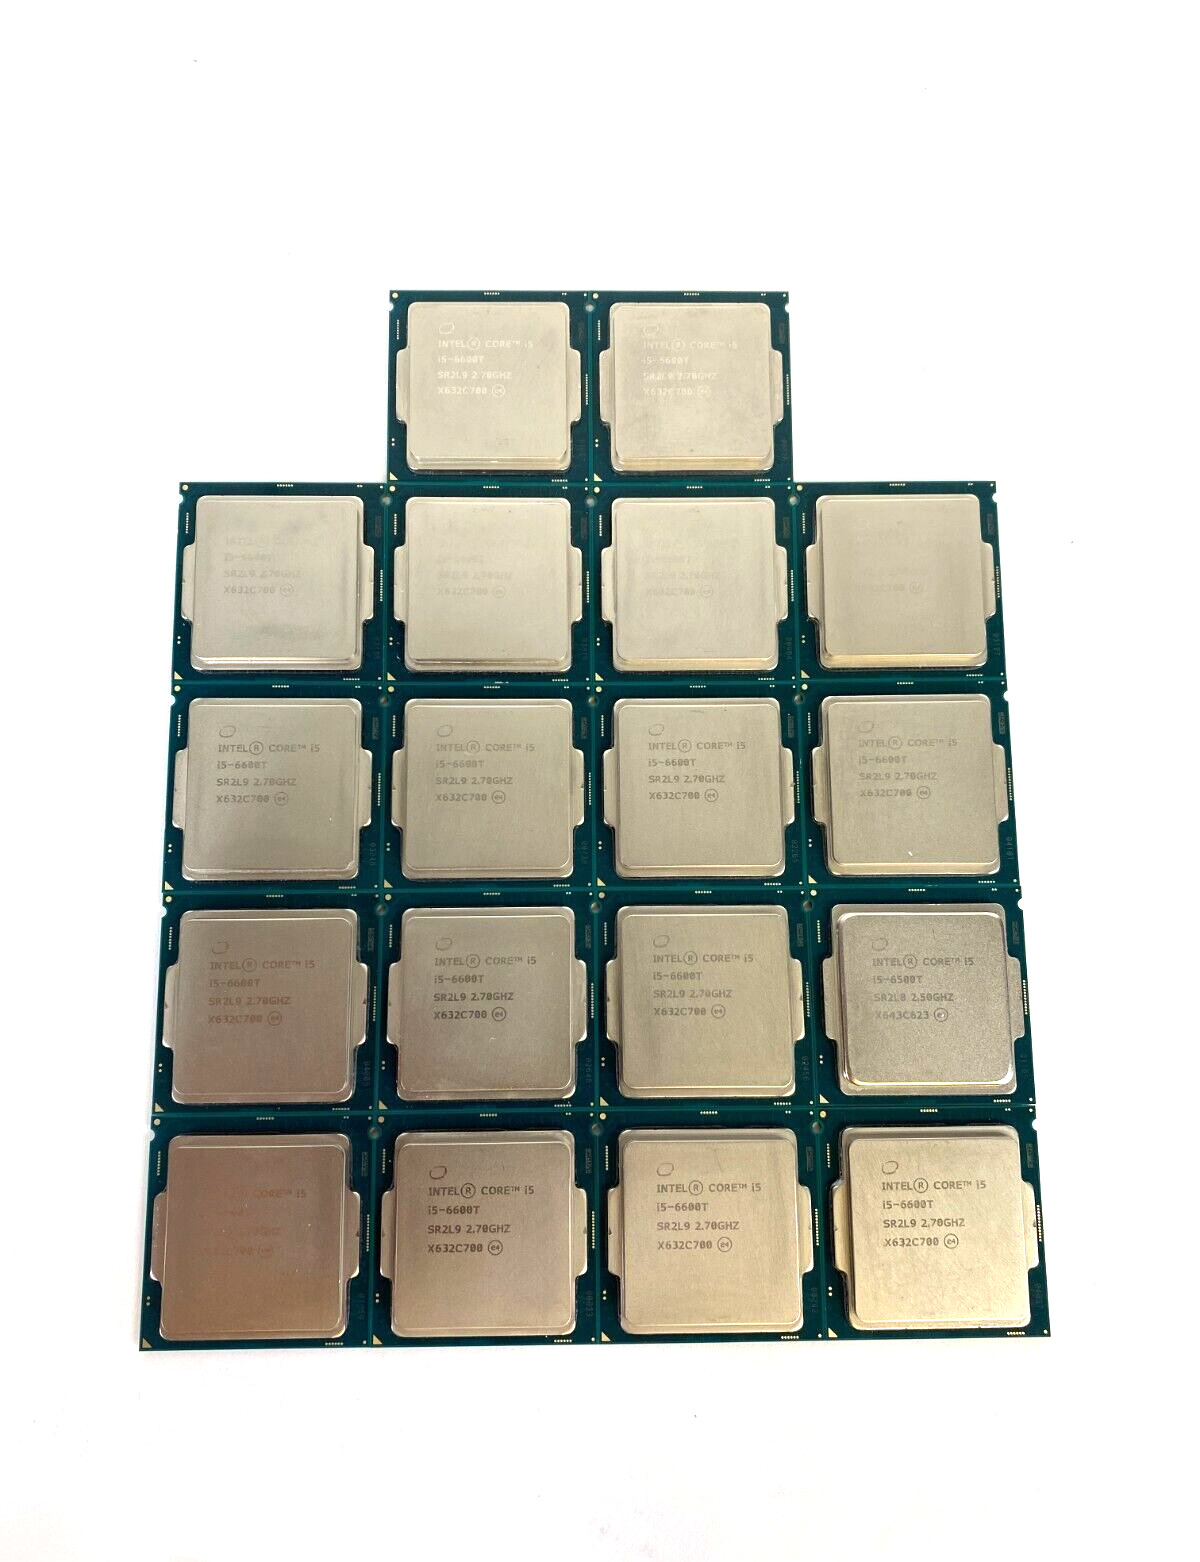 Lot of (18) Intel Core i5-6600T SR2L9 2.70GHz 6MB Cache 4 Cores CPU Processors